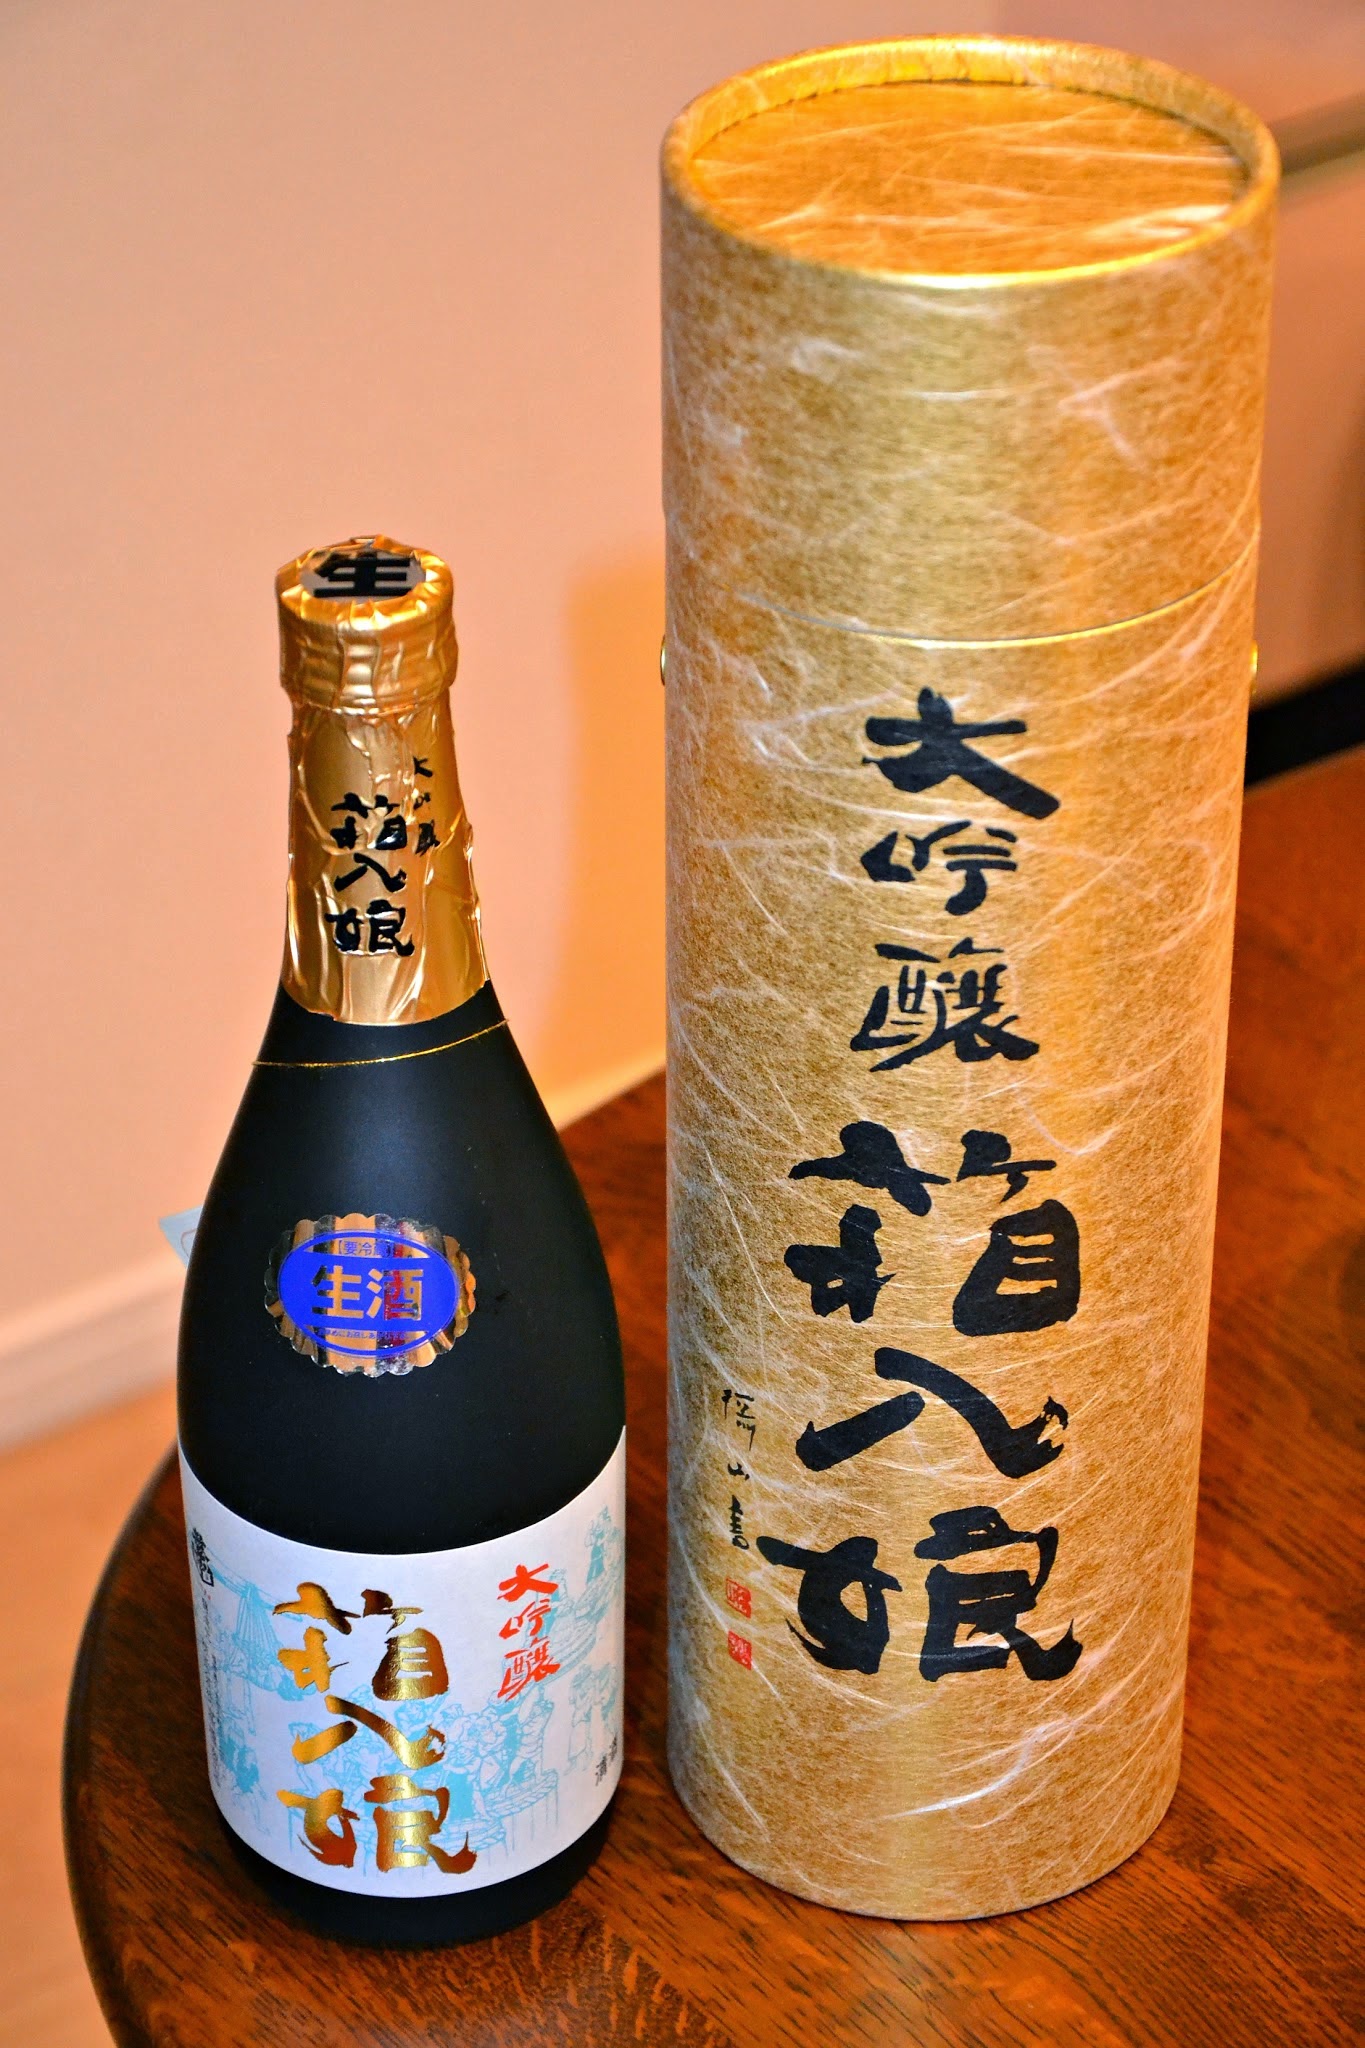 Sake with a modern packaging